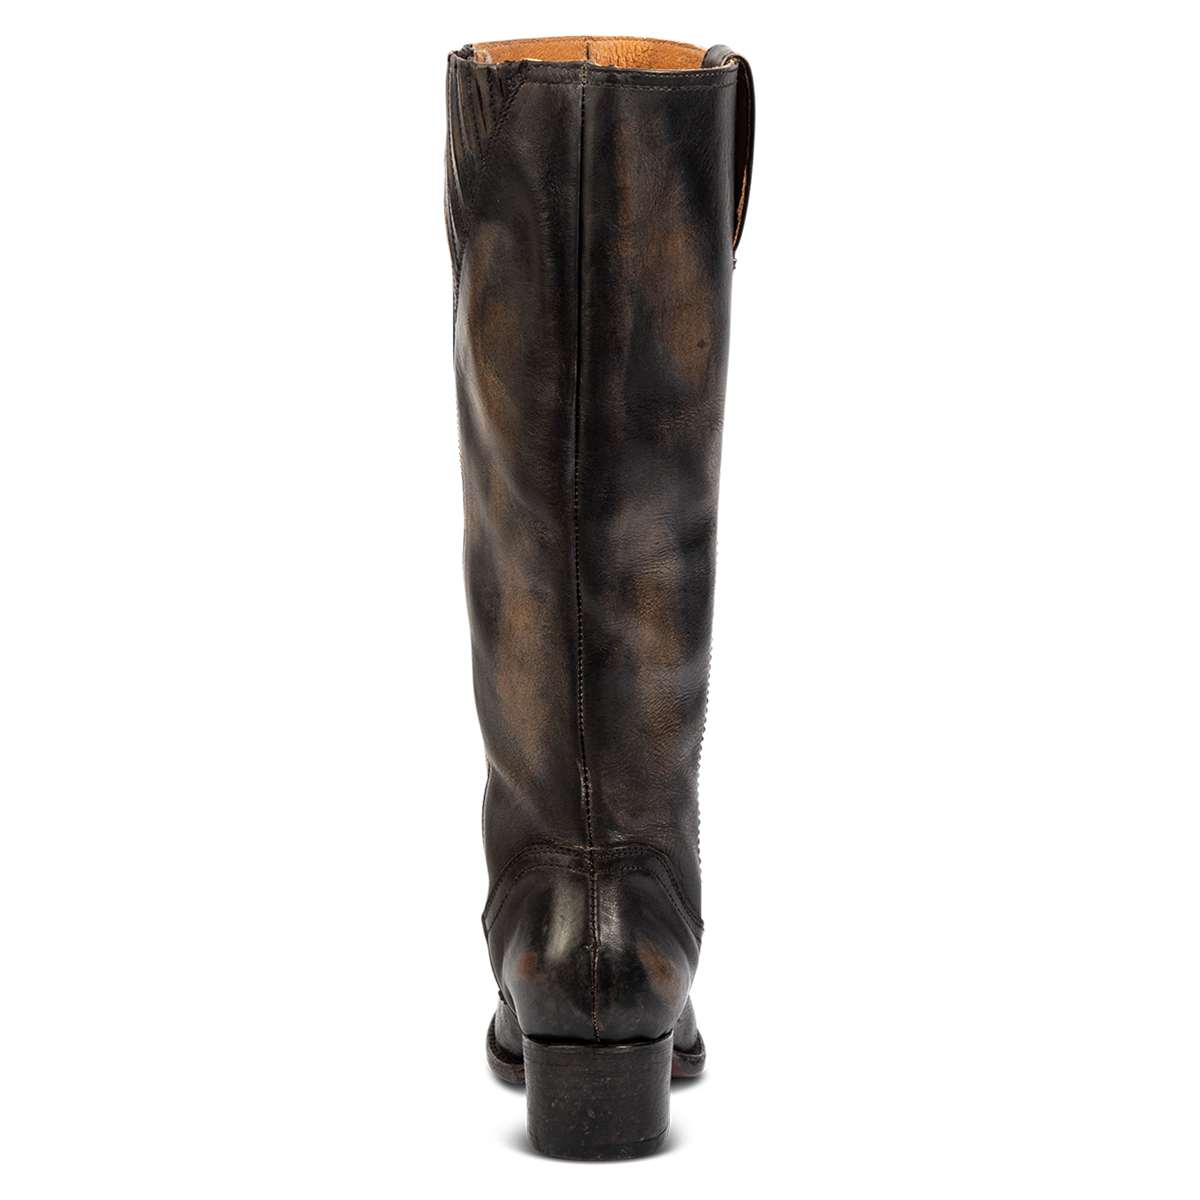 Inside view showing a low block heel, inside working brass zipper, and gore detailing on FREEBIRD women's Montana black leather boot